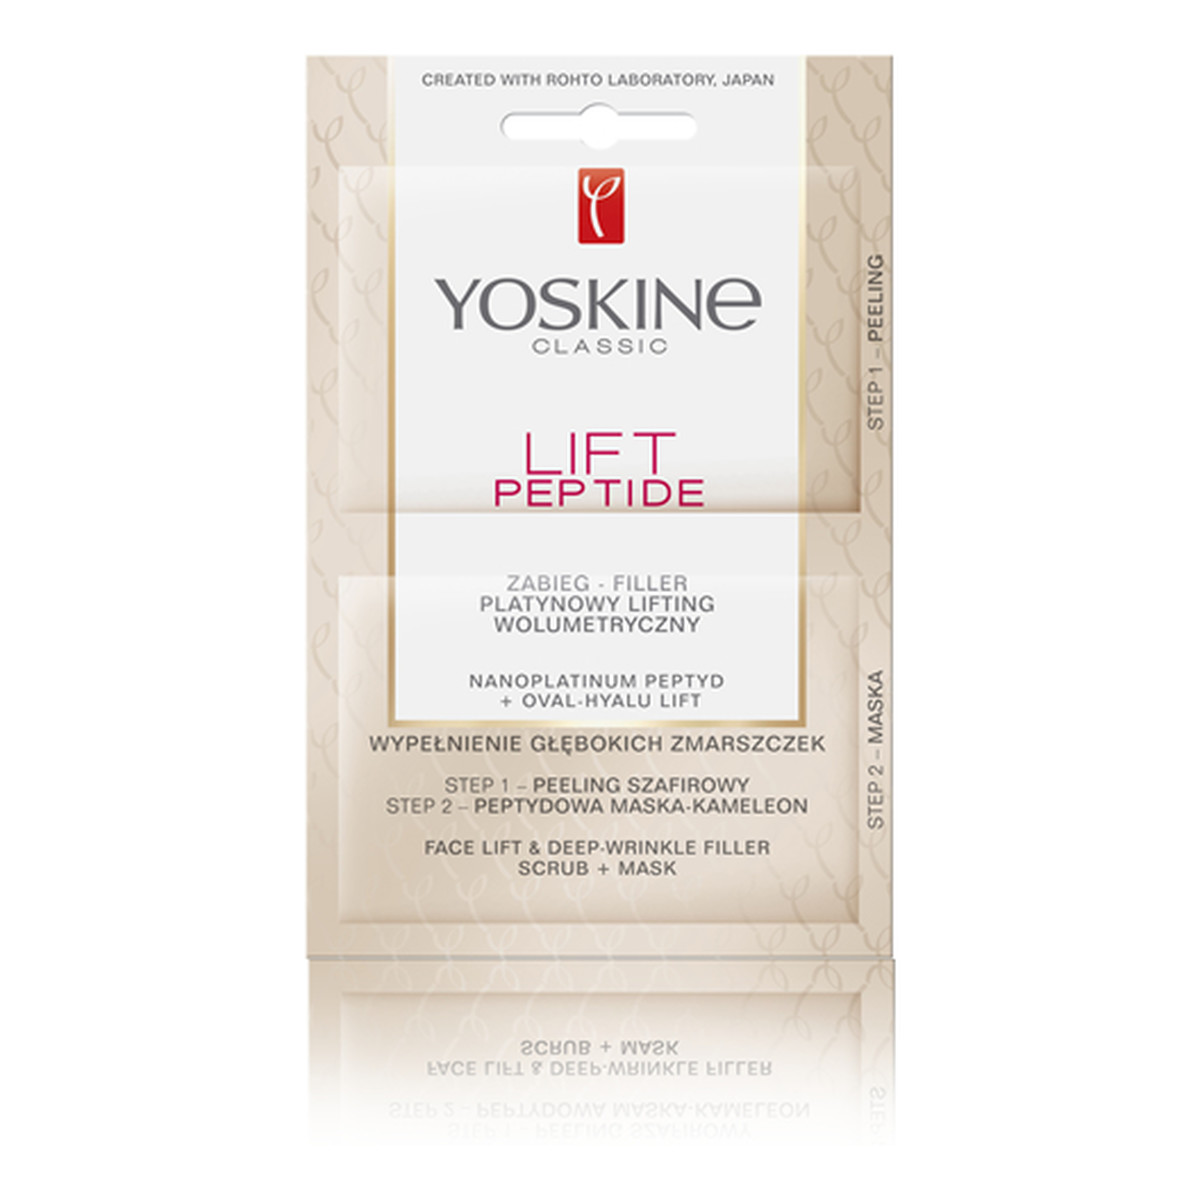 Yoskine Classic Lift Peptide Zabieg - Filler Platynowy Lifting Wolumetryczny